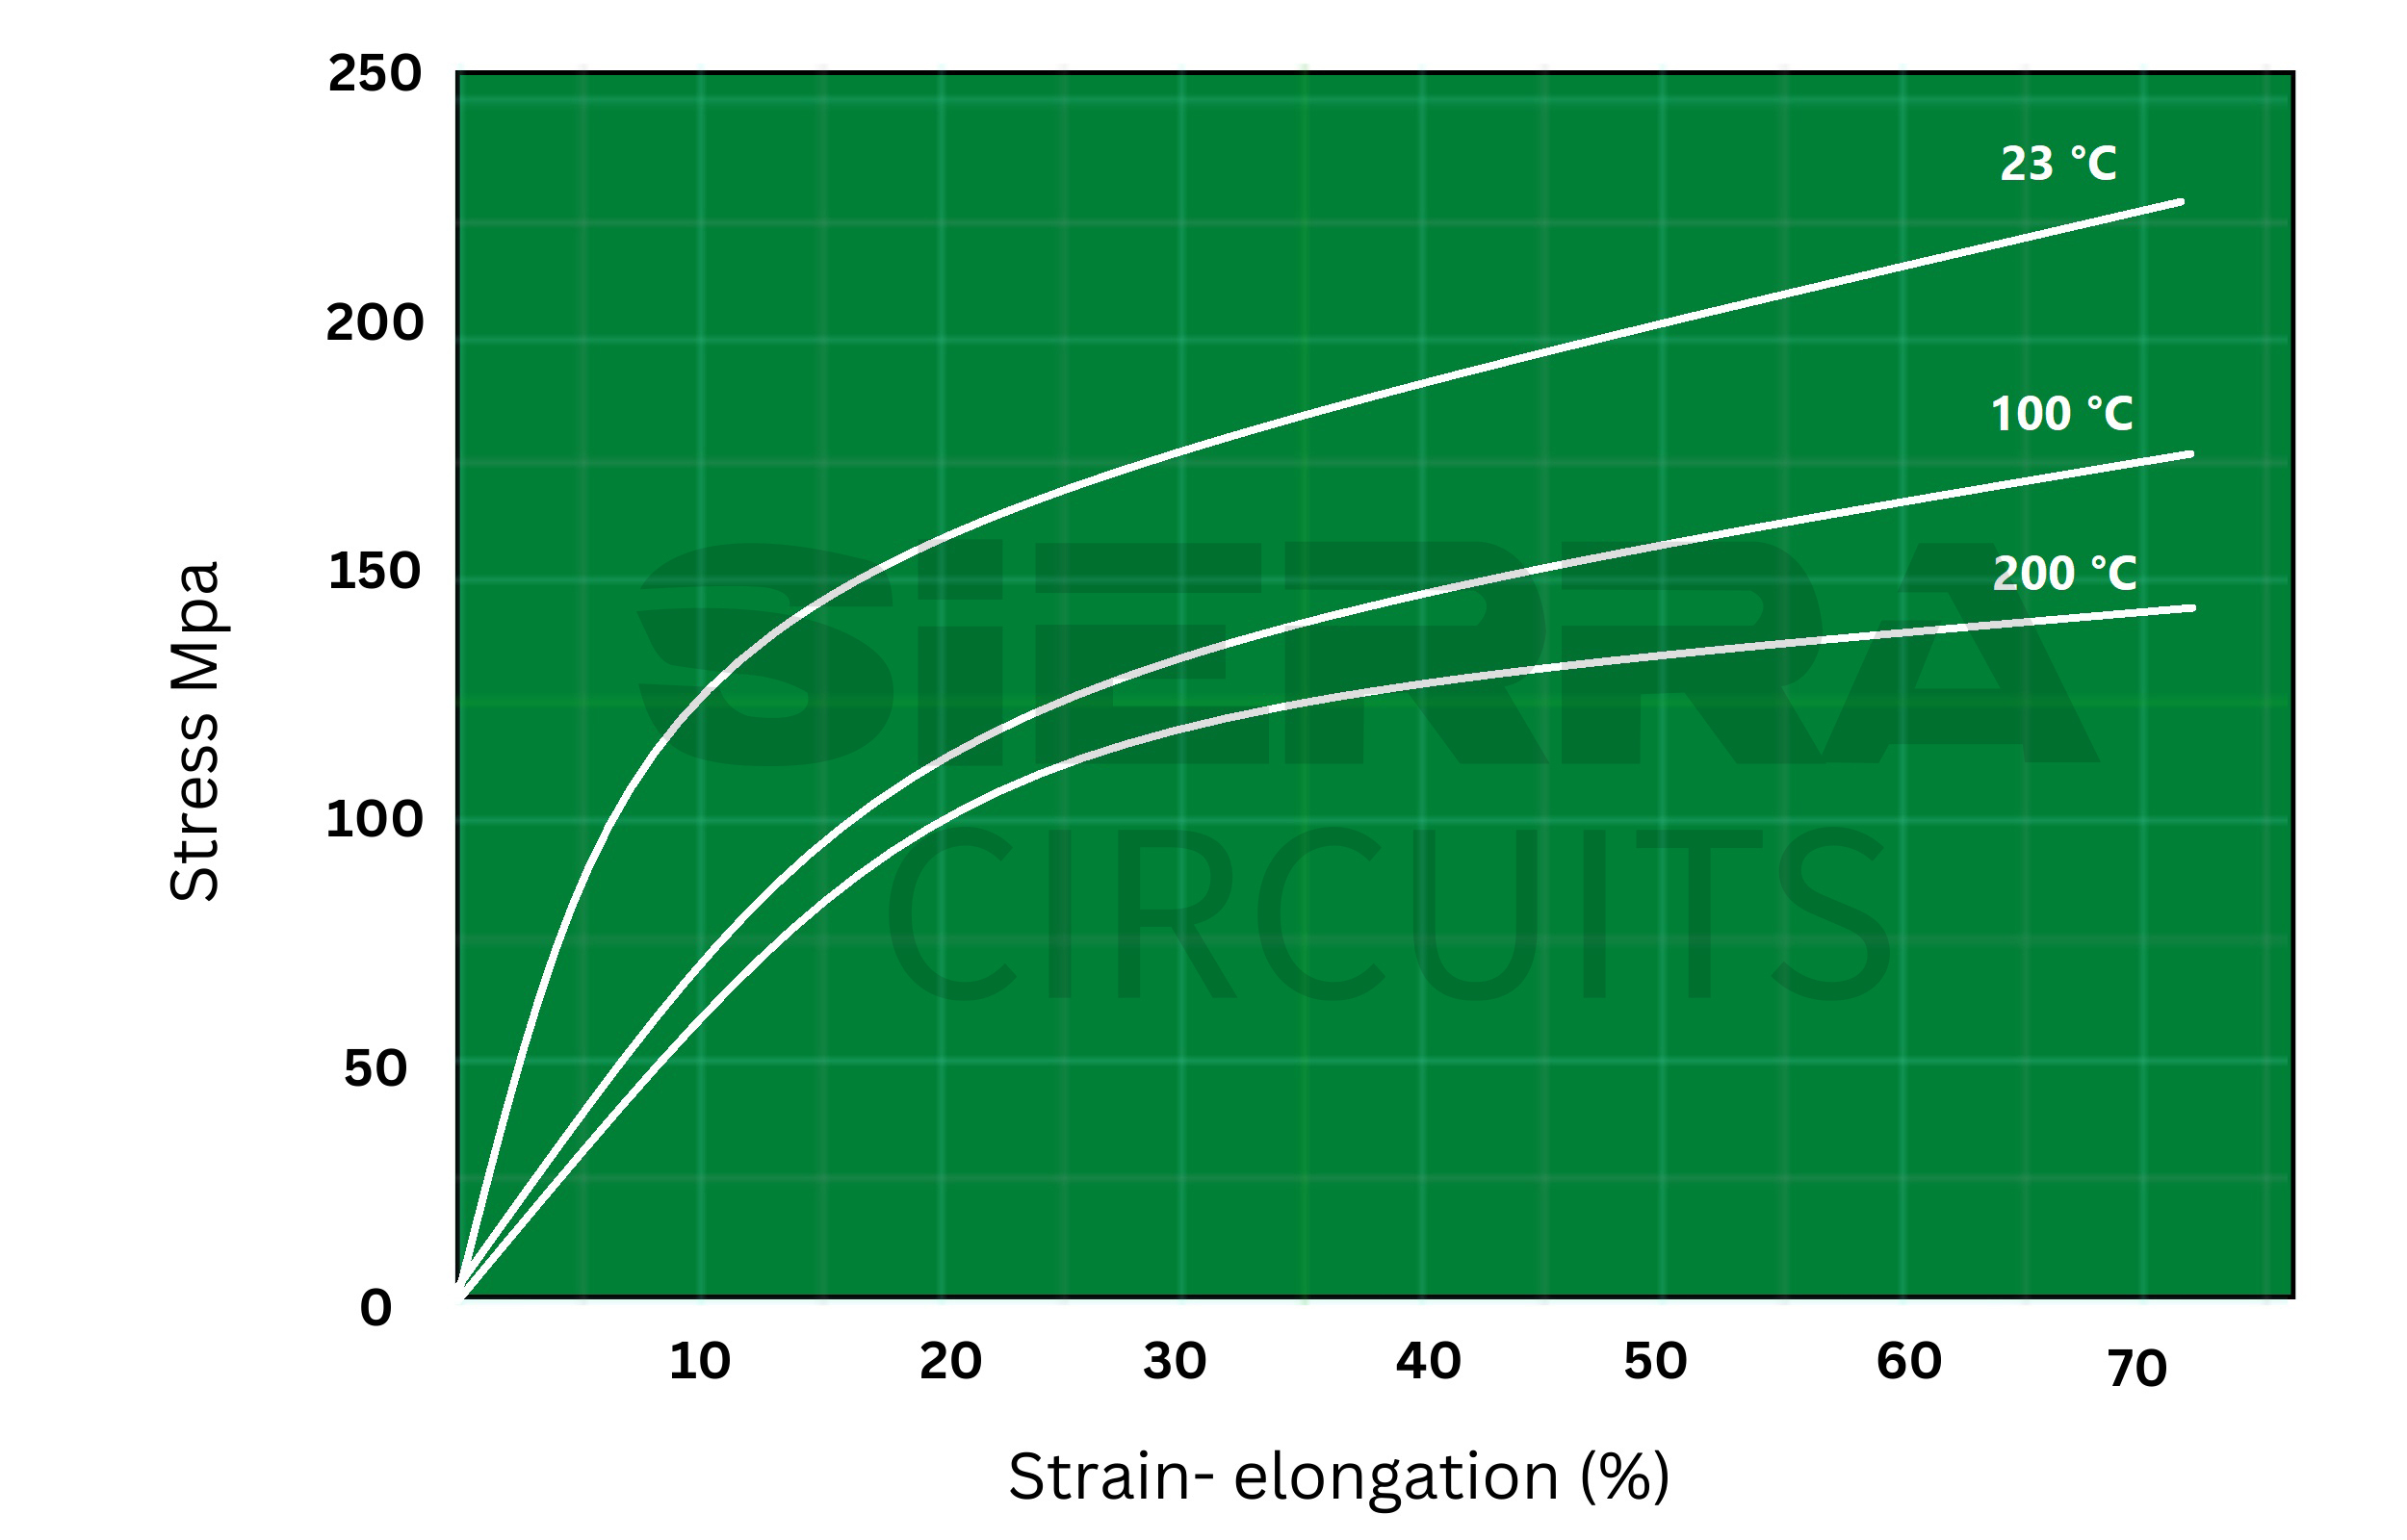 stress-vs-elongation-plot-of-kapton-type-hn-polyimide-material.jpg